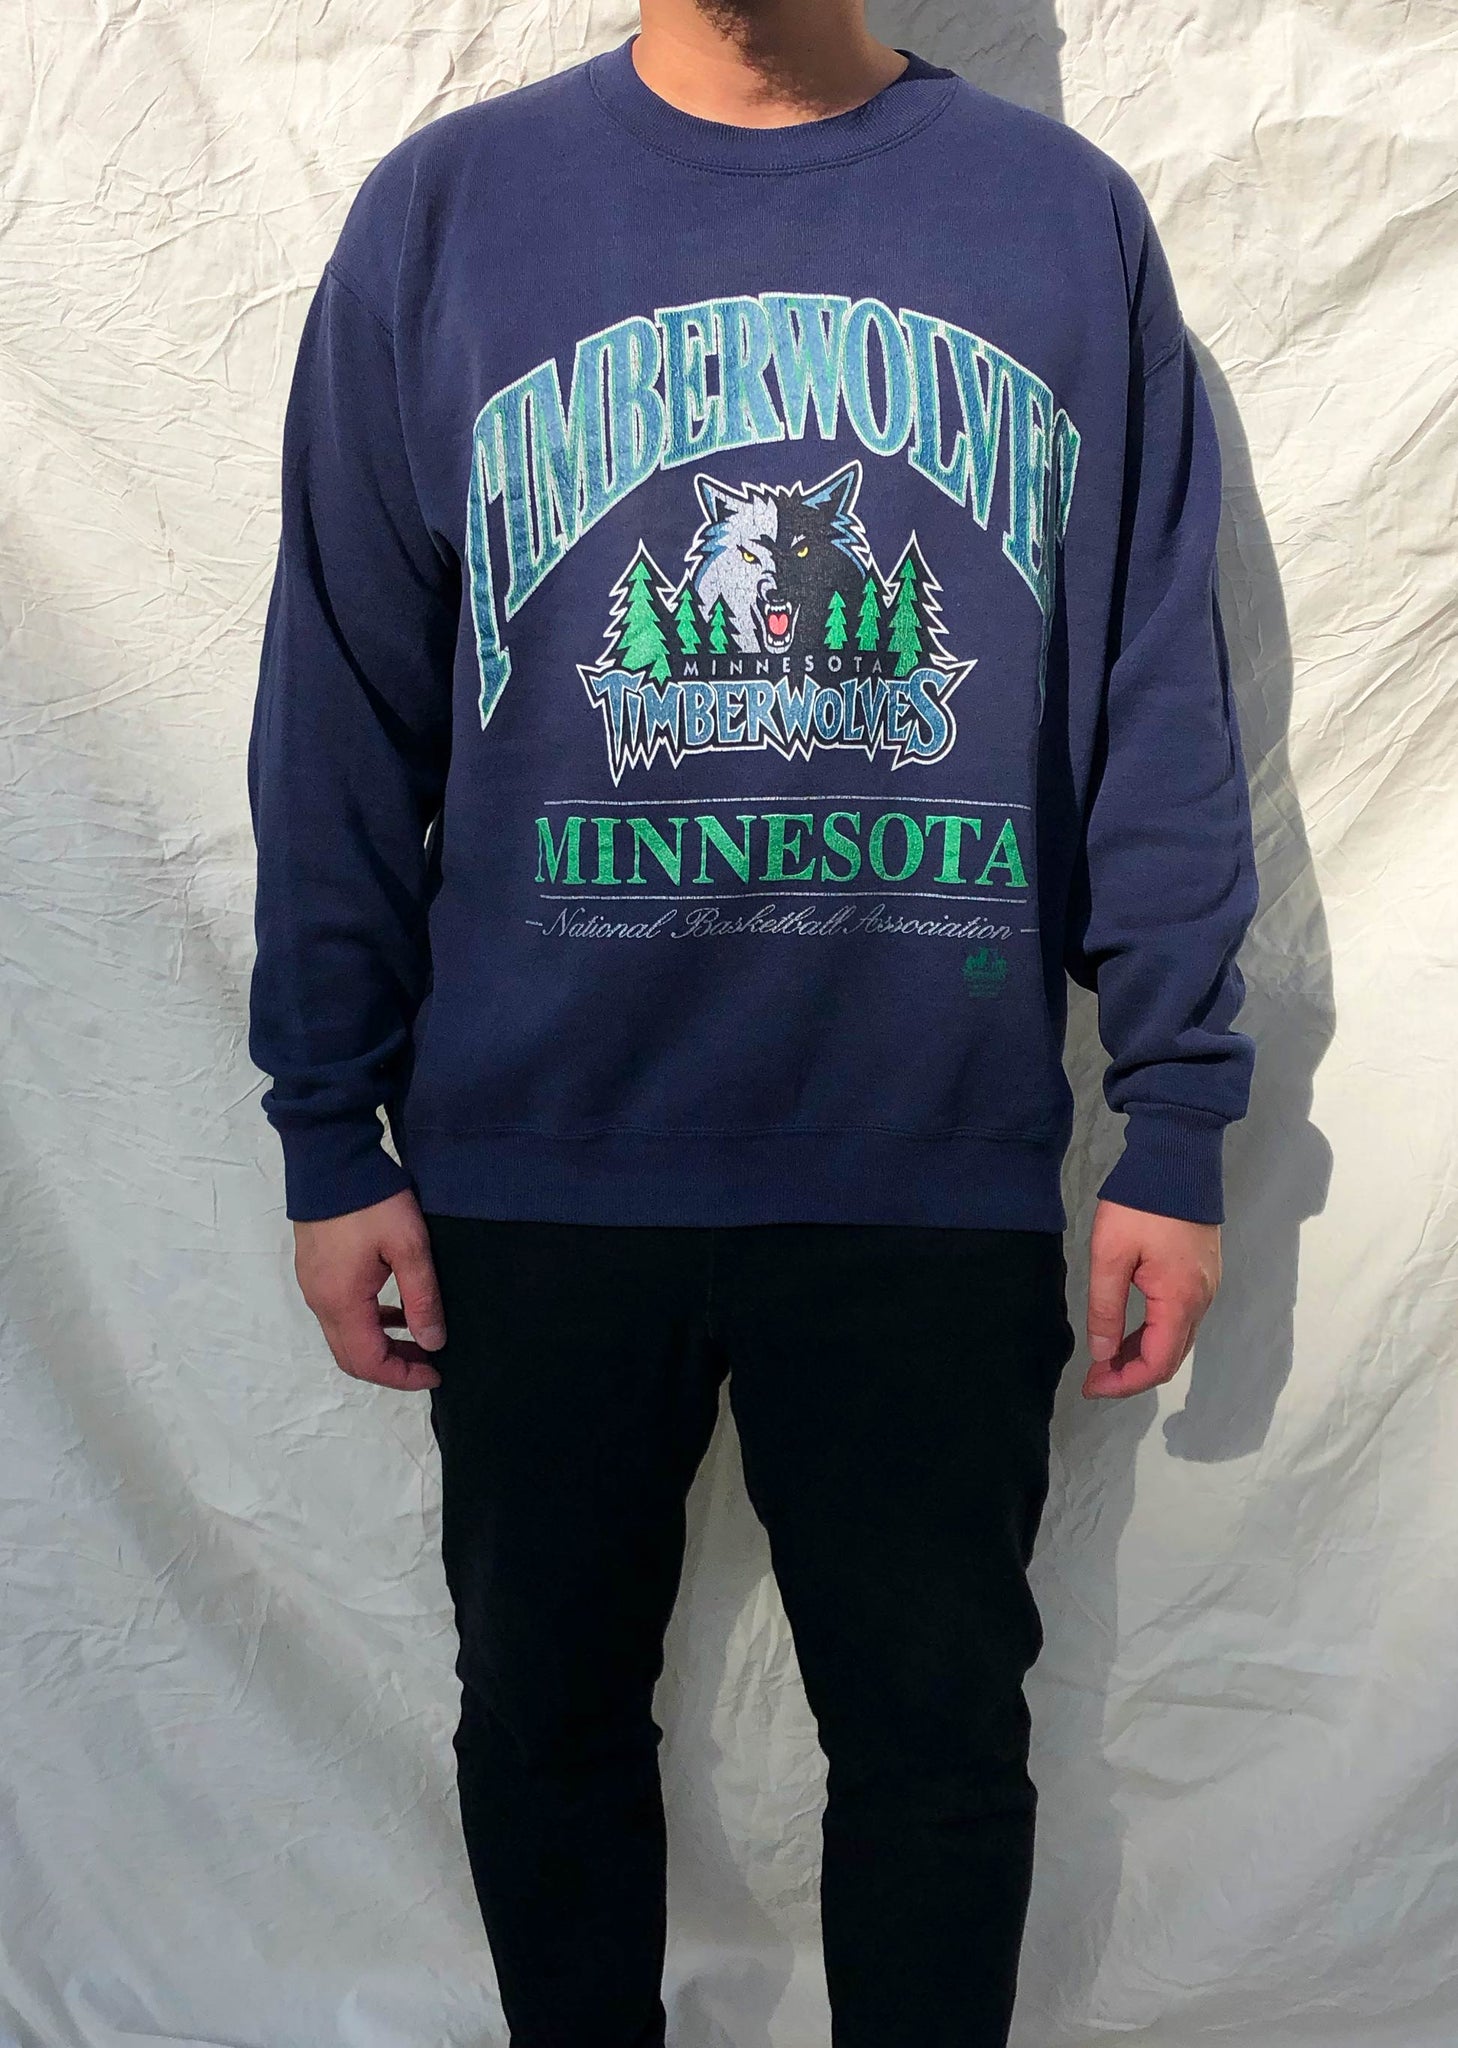 timberwolves vintage sweatshirt